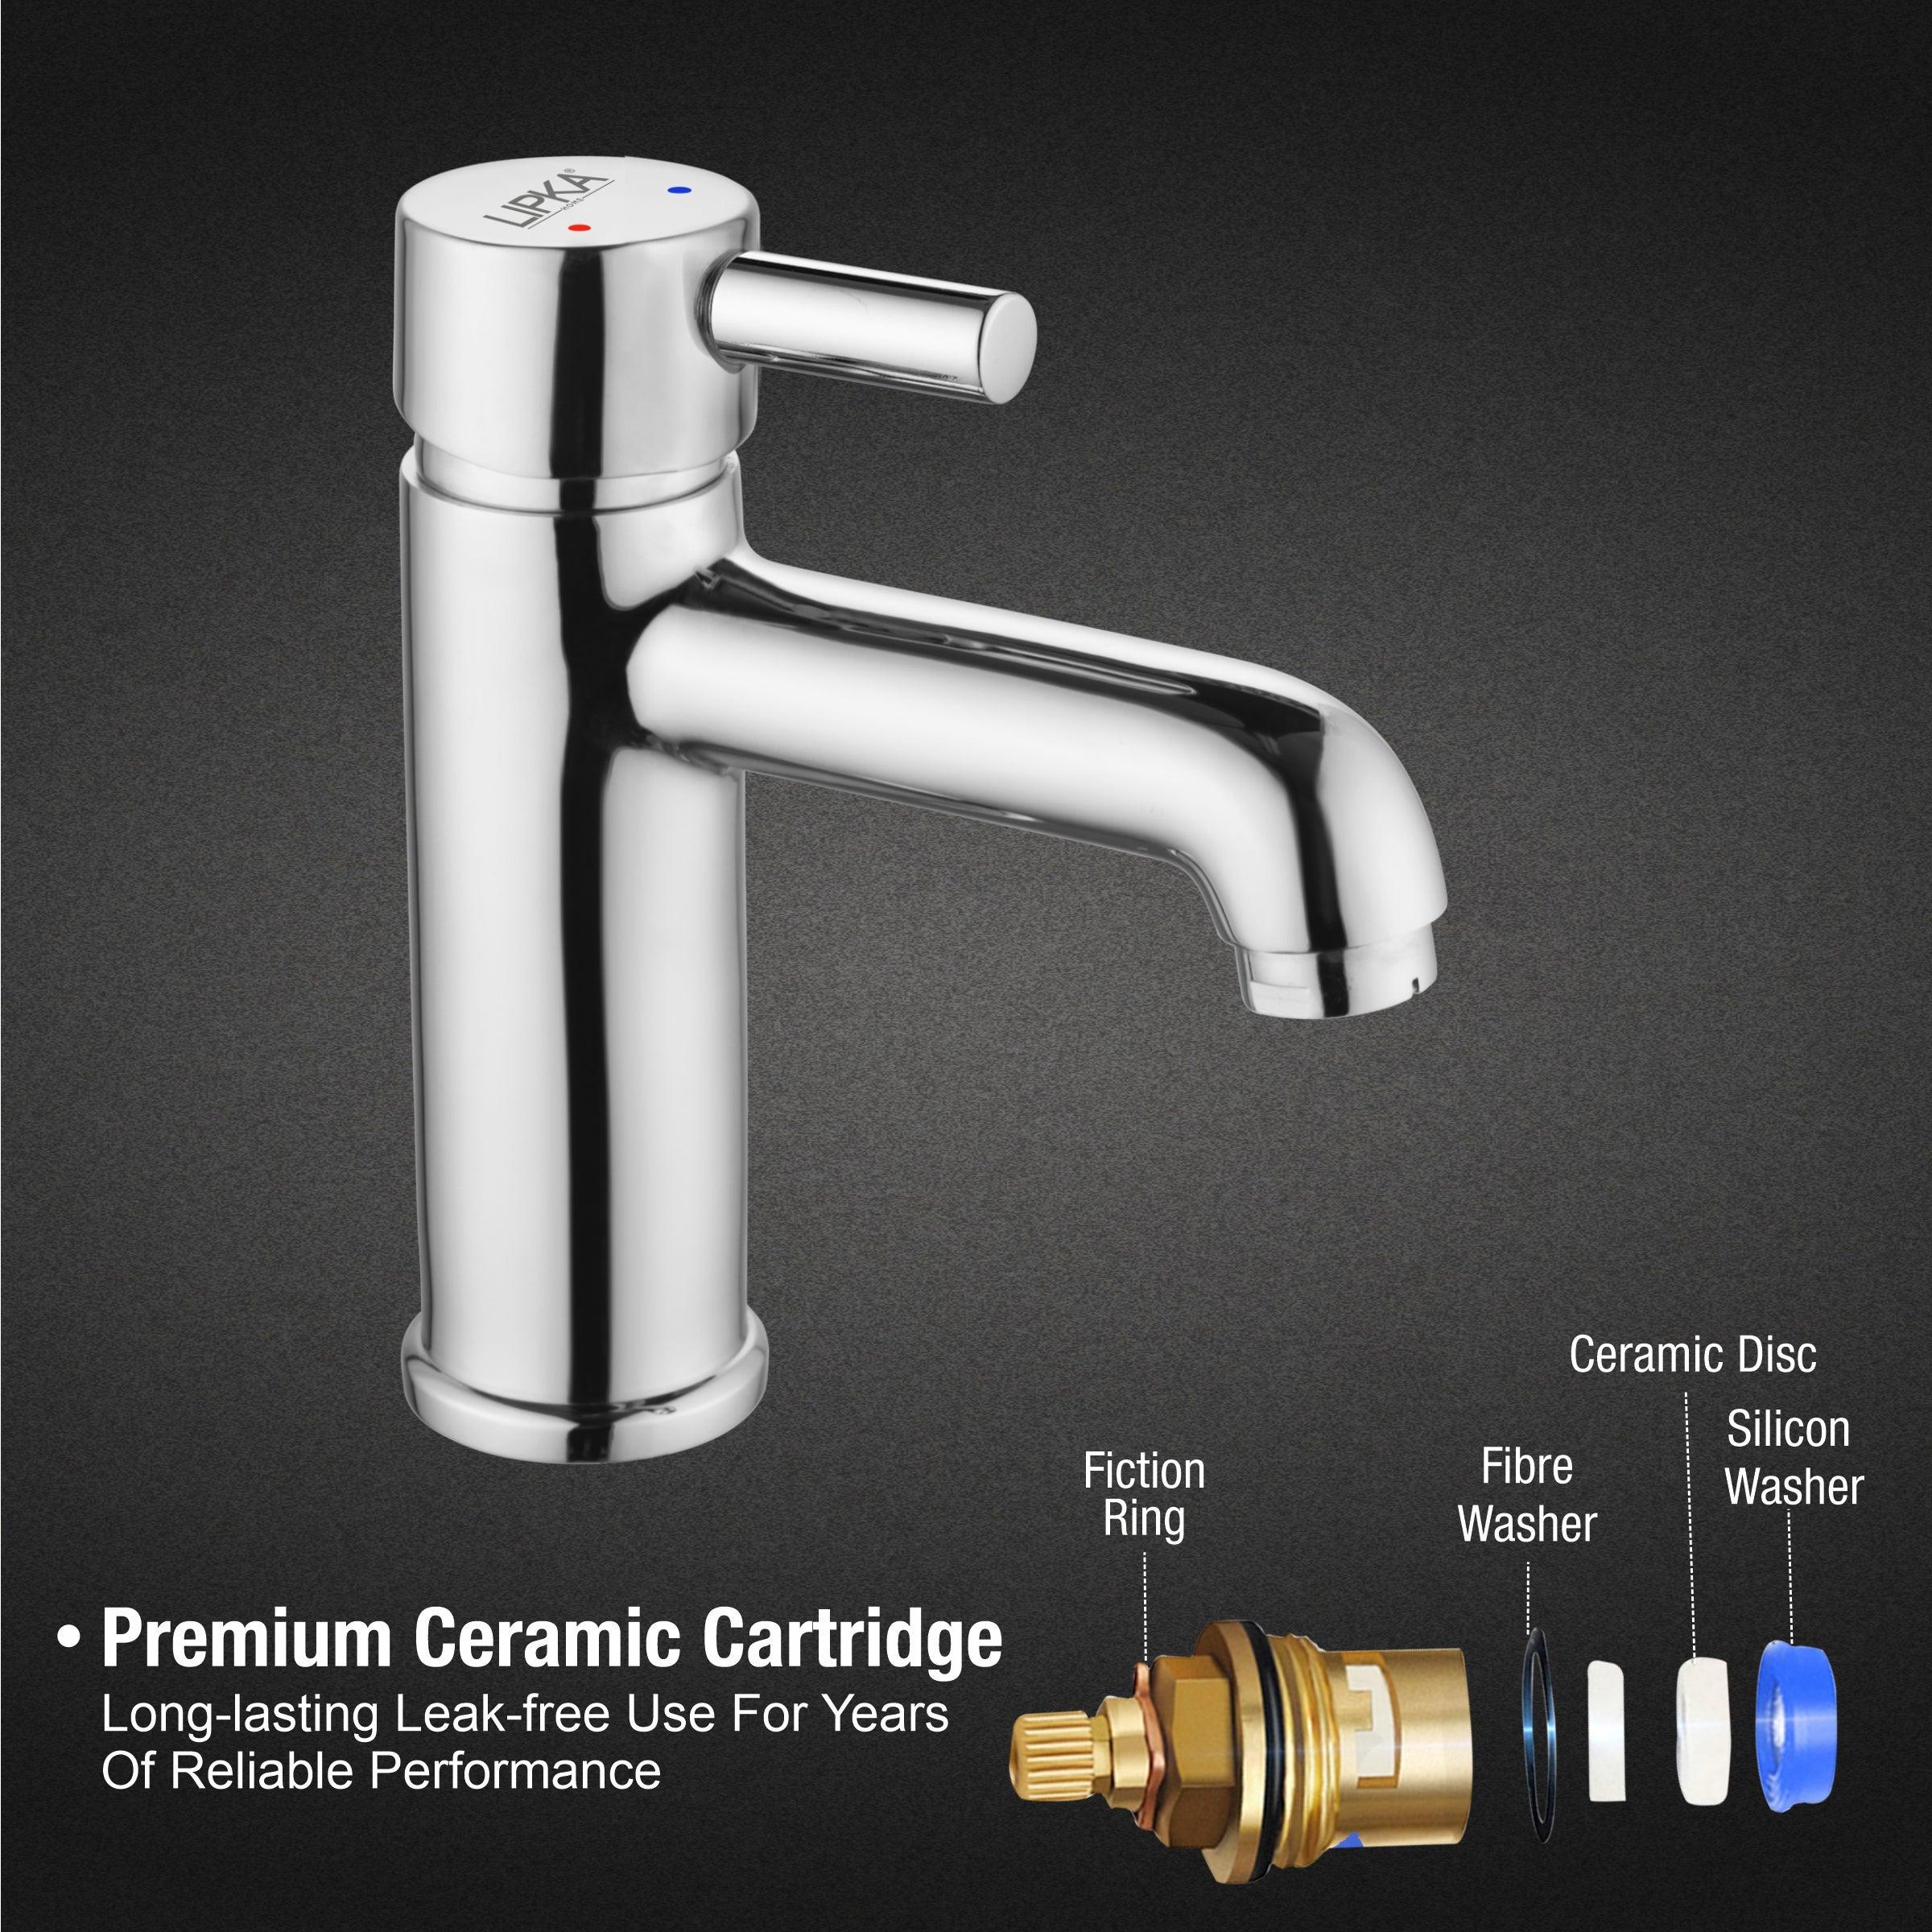 Kyron Single Lever Basin Mixer Brass Faucet - LIPKA - Lipka Home